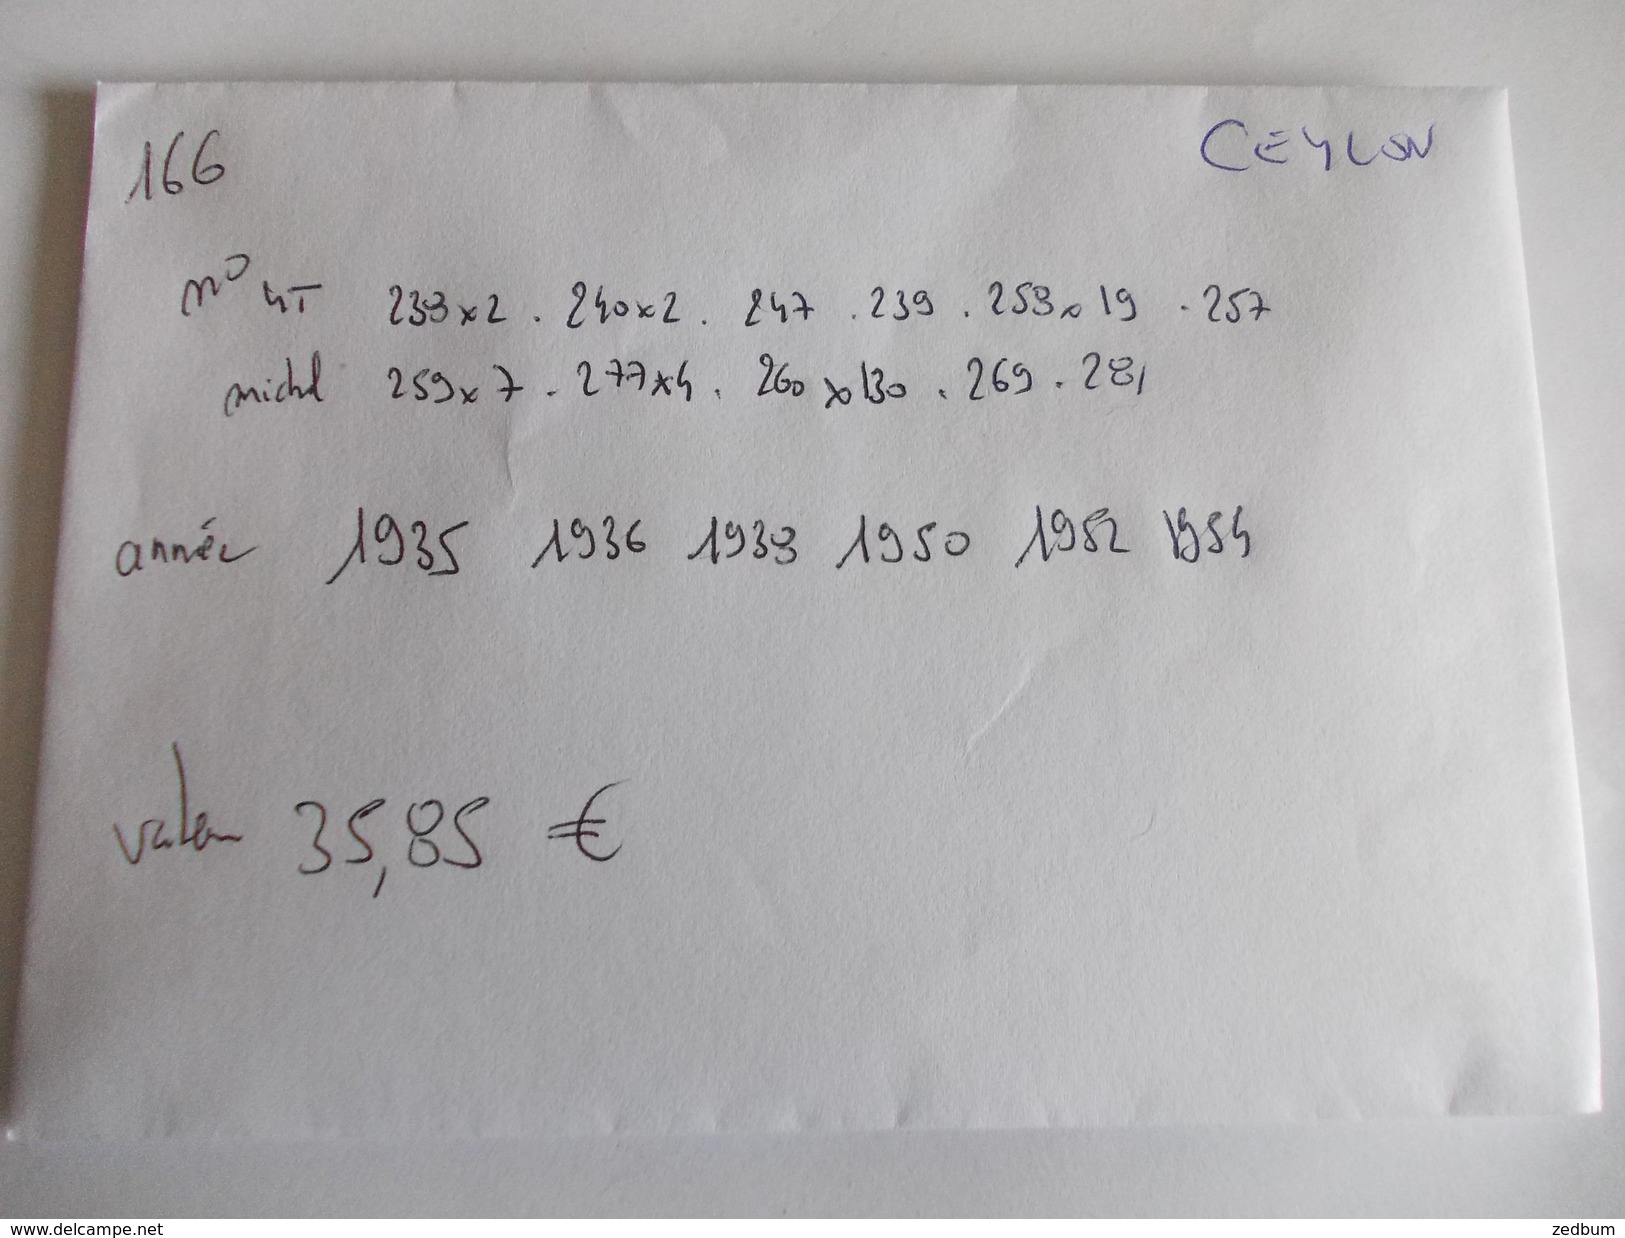 TIMBRE Ceylan valeur 35.85 &euro;